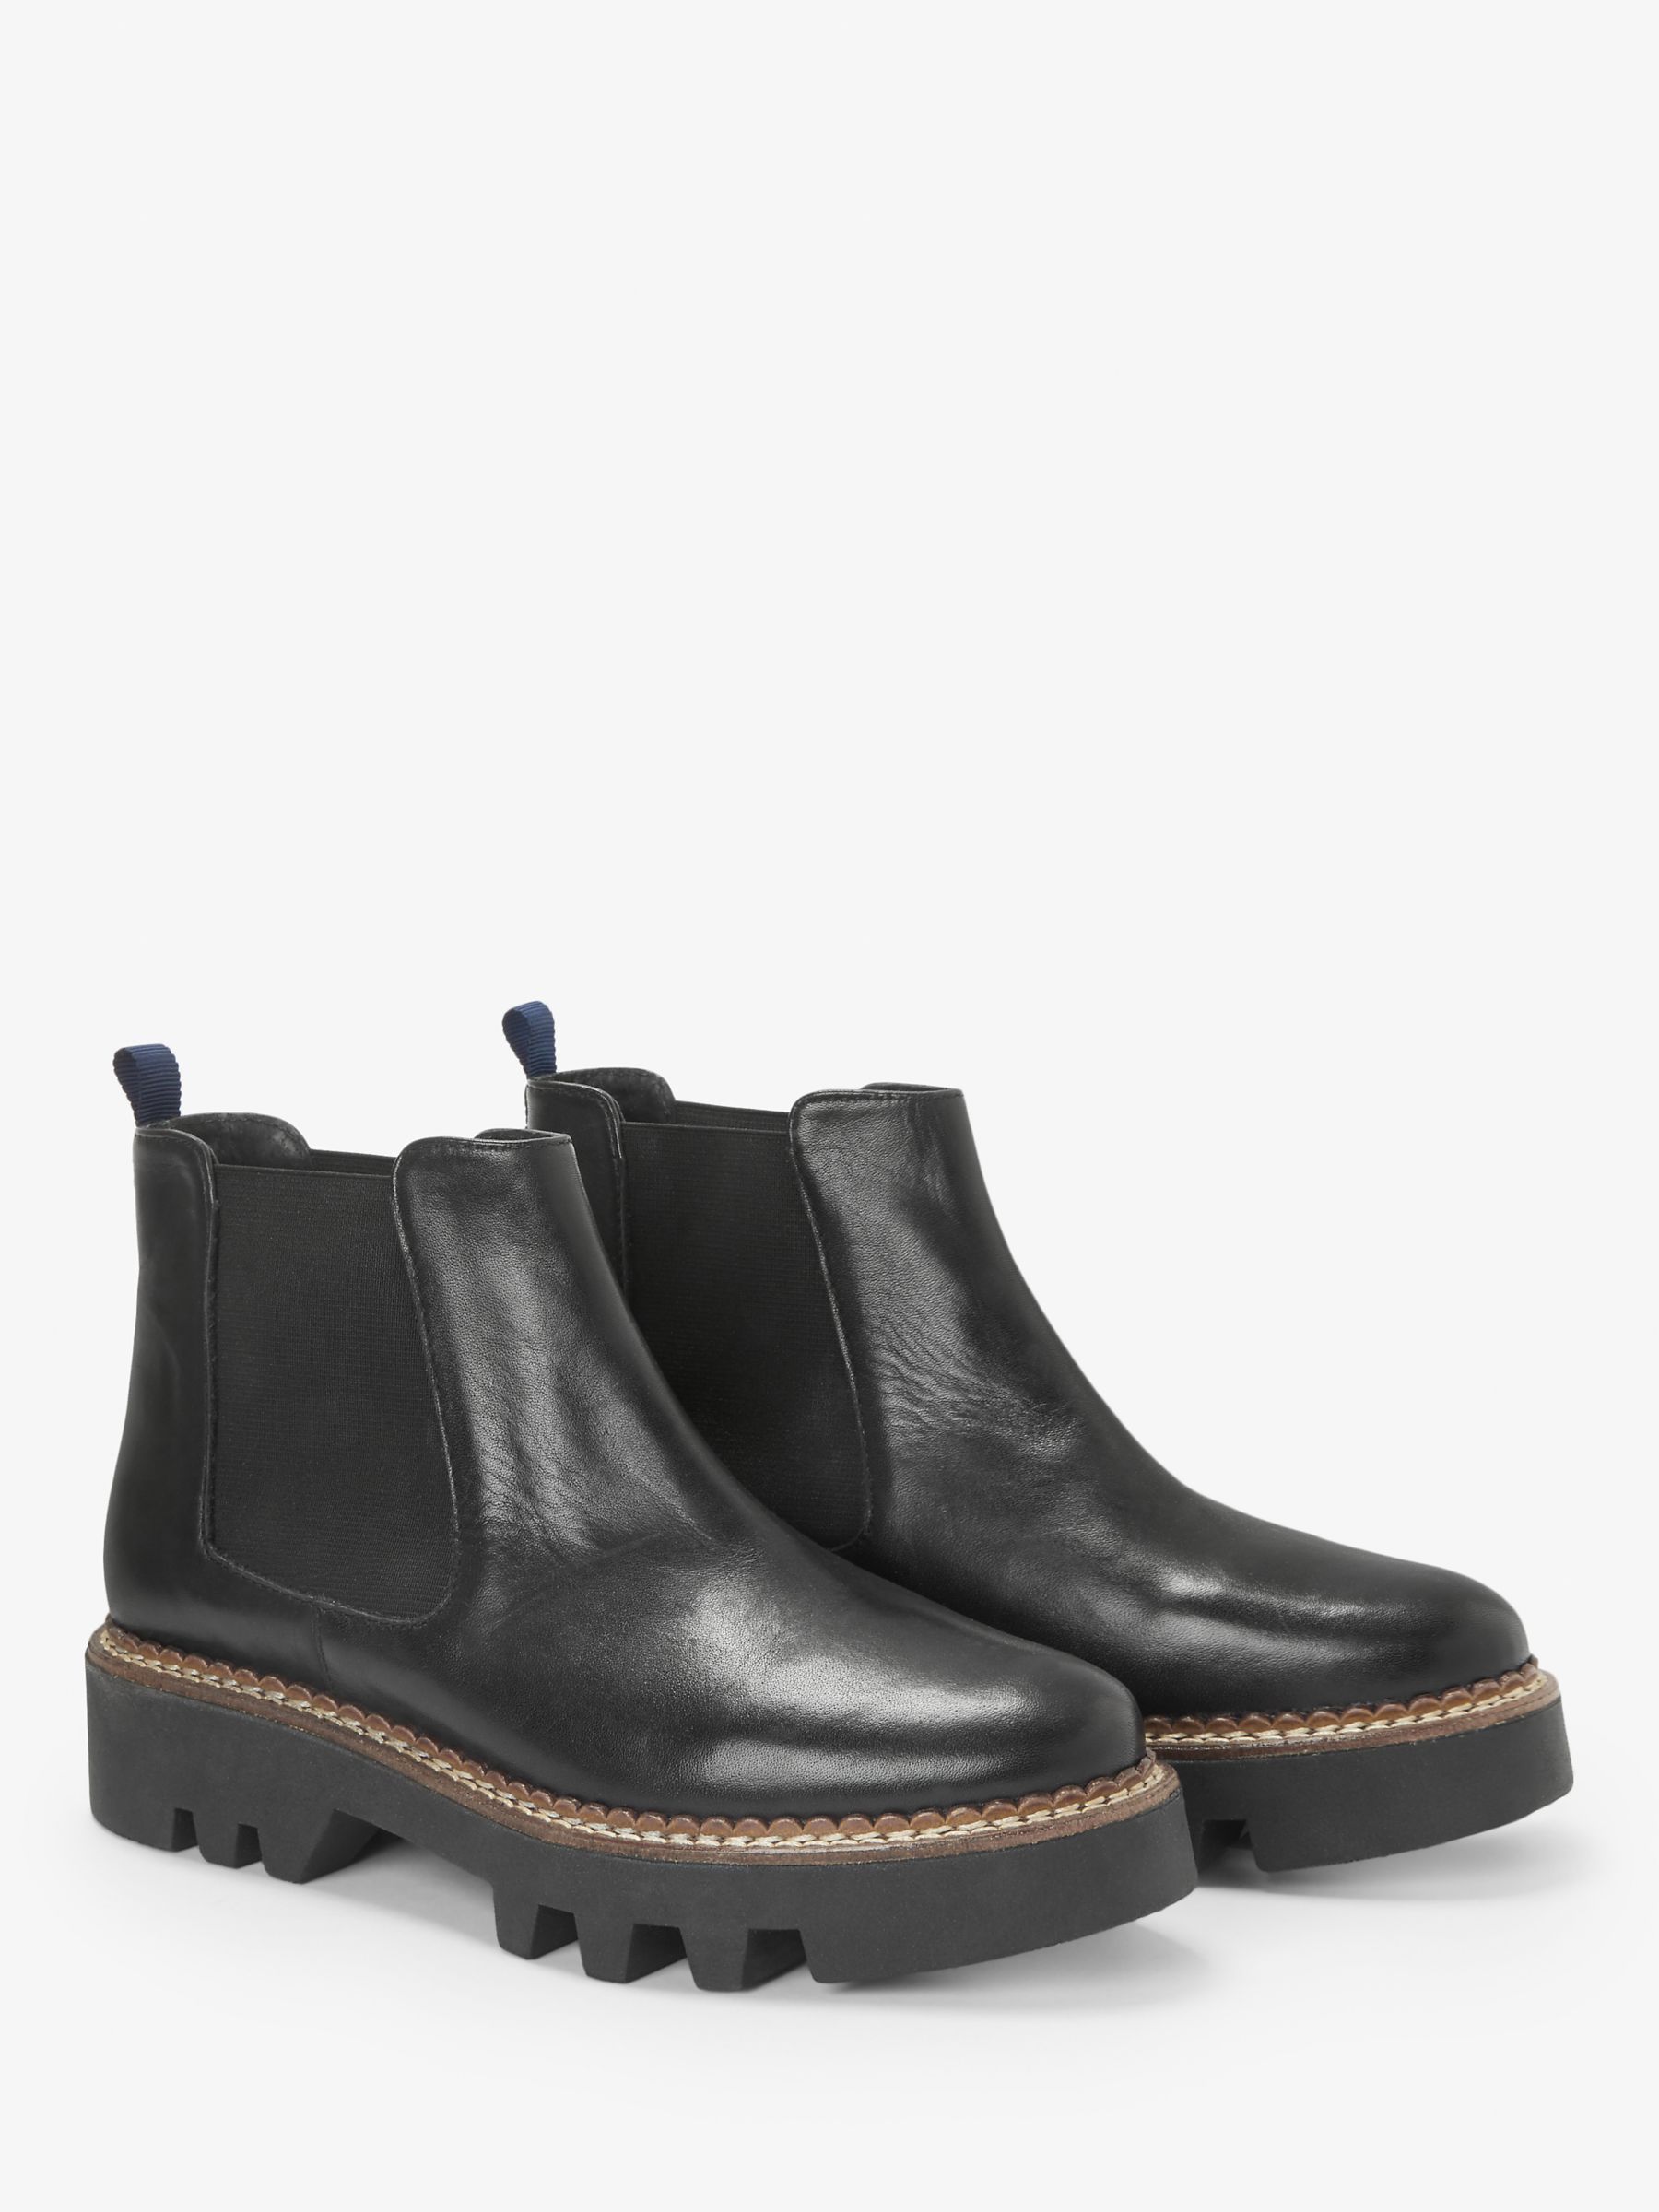 Kin Paisley Leather Flatform Chelsea Boots, Black, 3